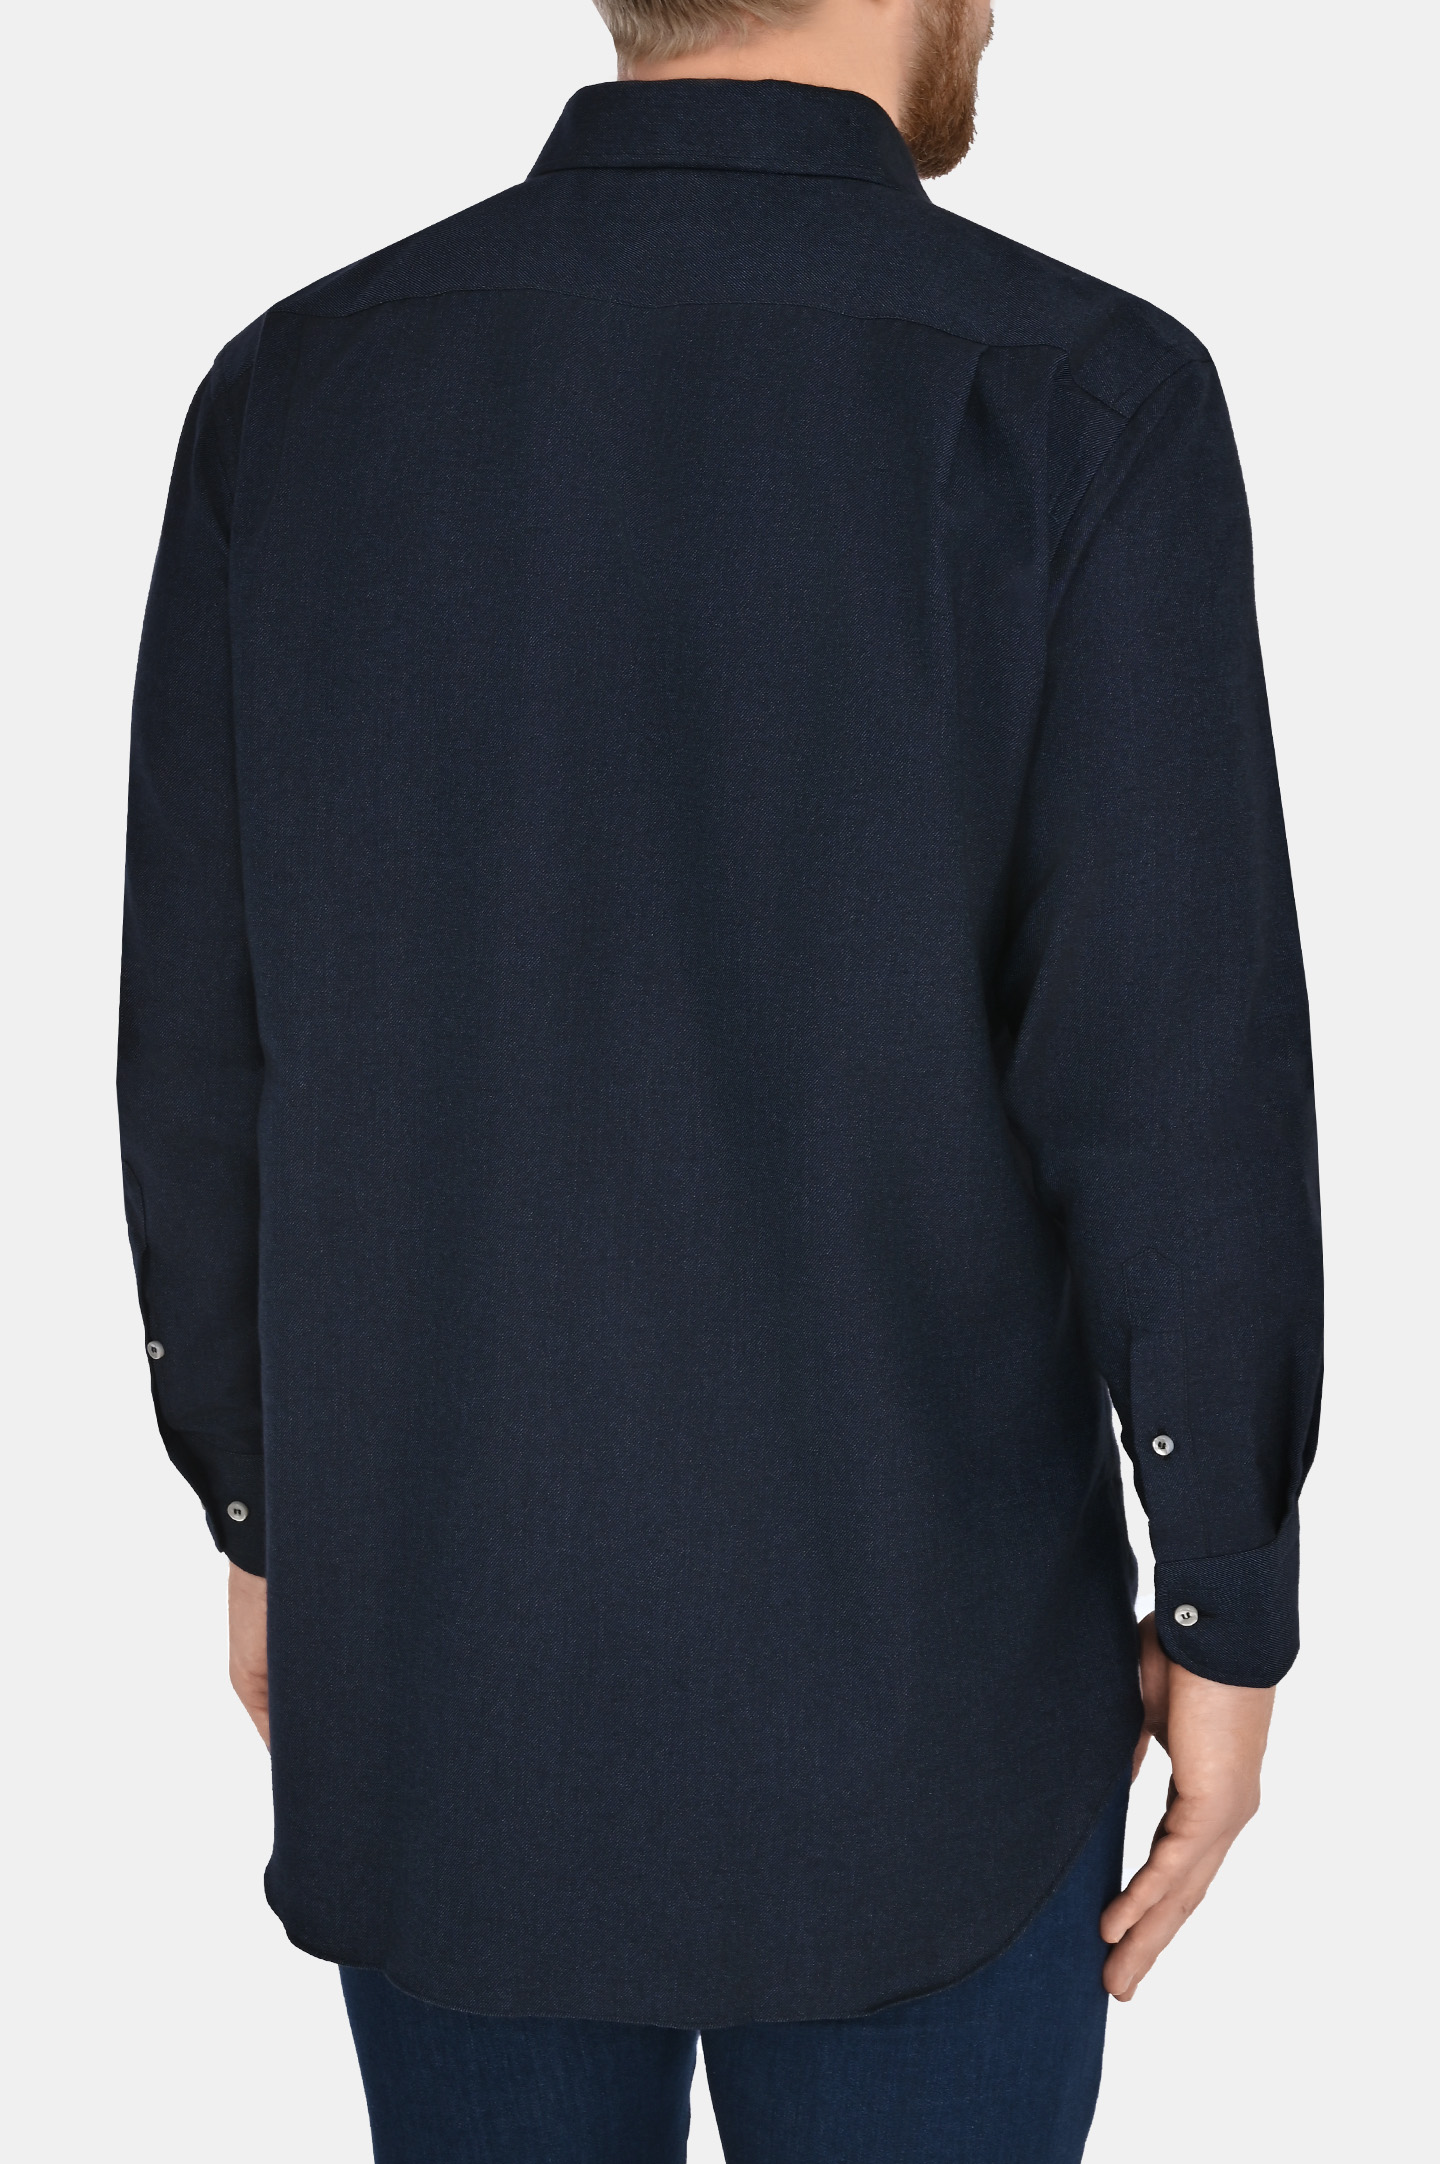 Рубашка LORO PIANA FAM5263, цвет: Темно-синий, Мужской